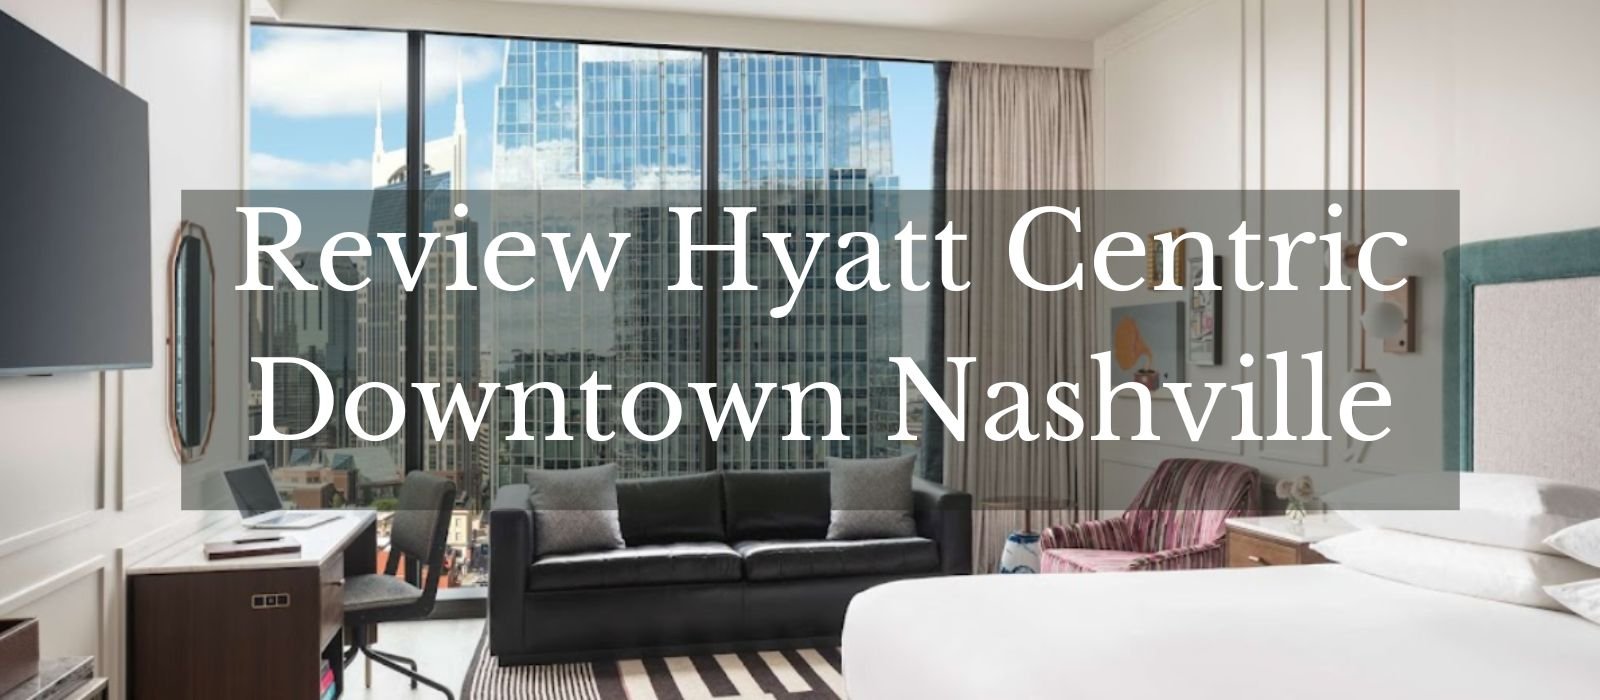 Review Hyatt Centric Downtown Nashville